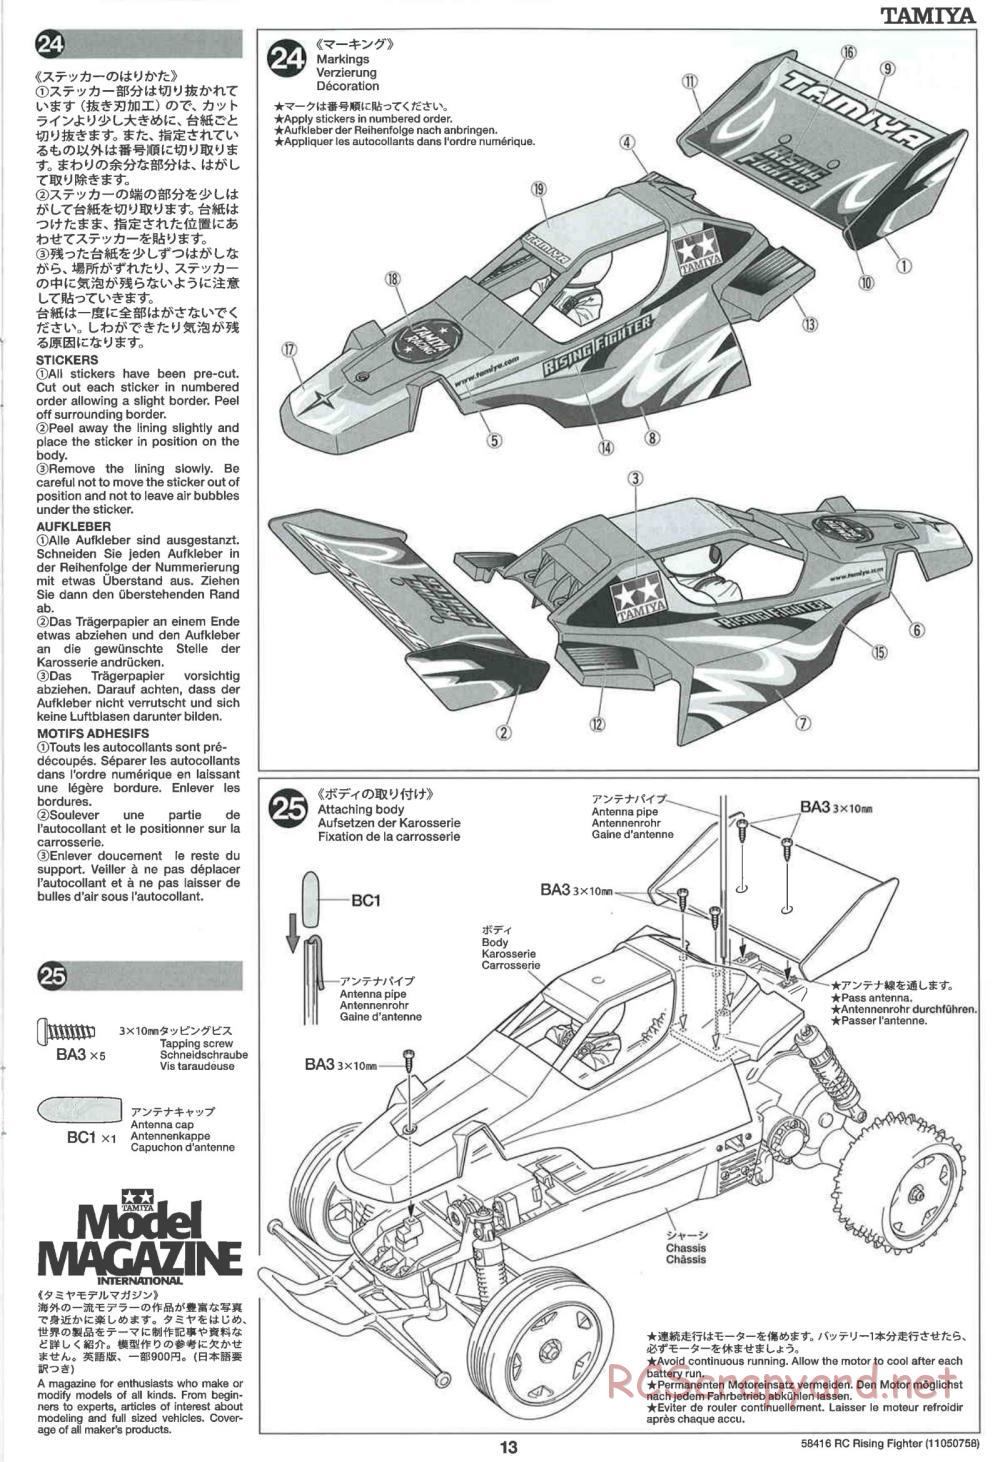 Tamiya - Rising Fighter Chassis - Manual - Page 13